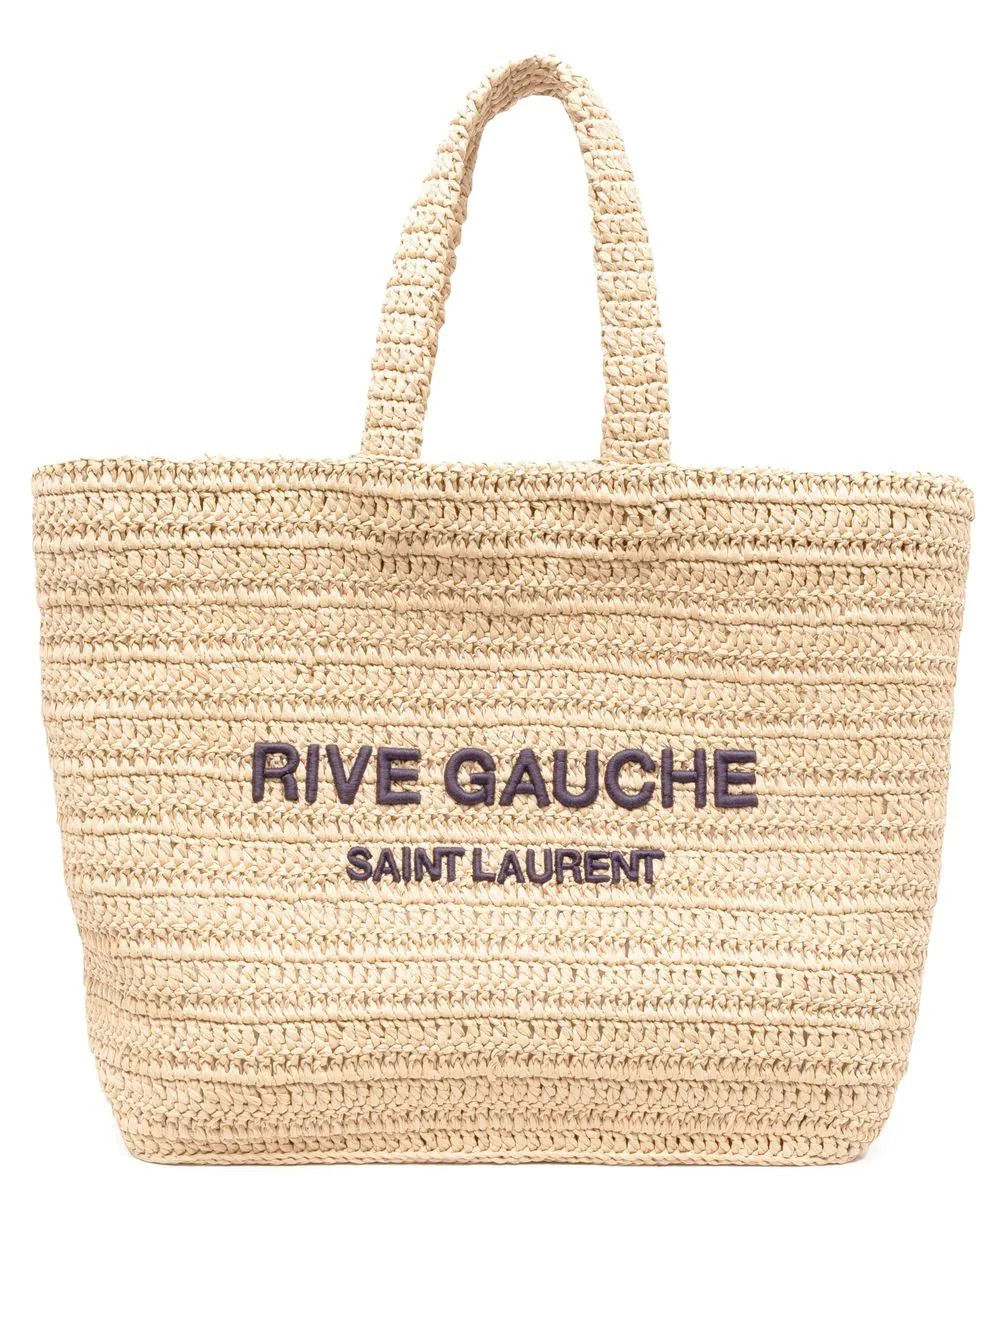 Rive Gauche Shopper